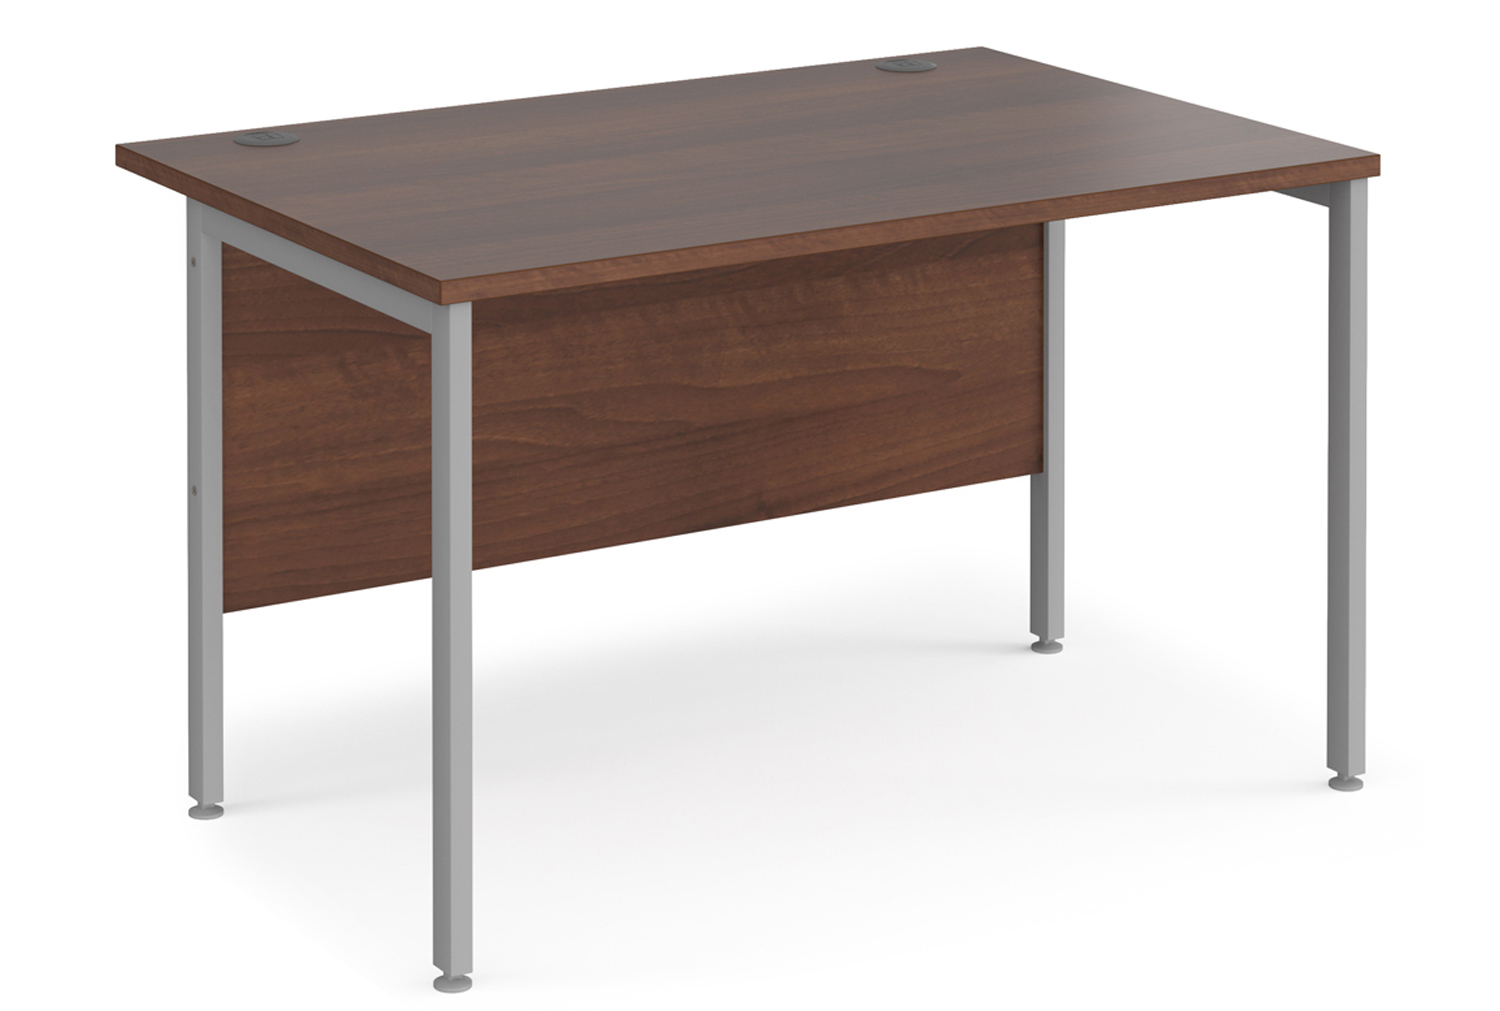 Value Line Deluxe H-Leg Rectangular Office Desk (Silver Legs), 120wx80dx73h (cm), Walnut